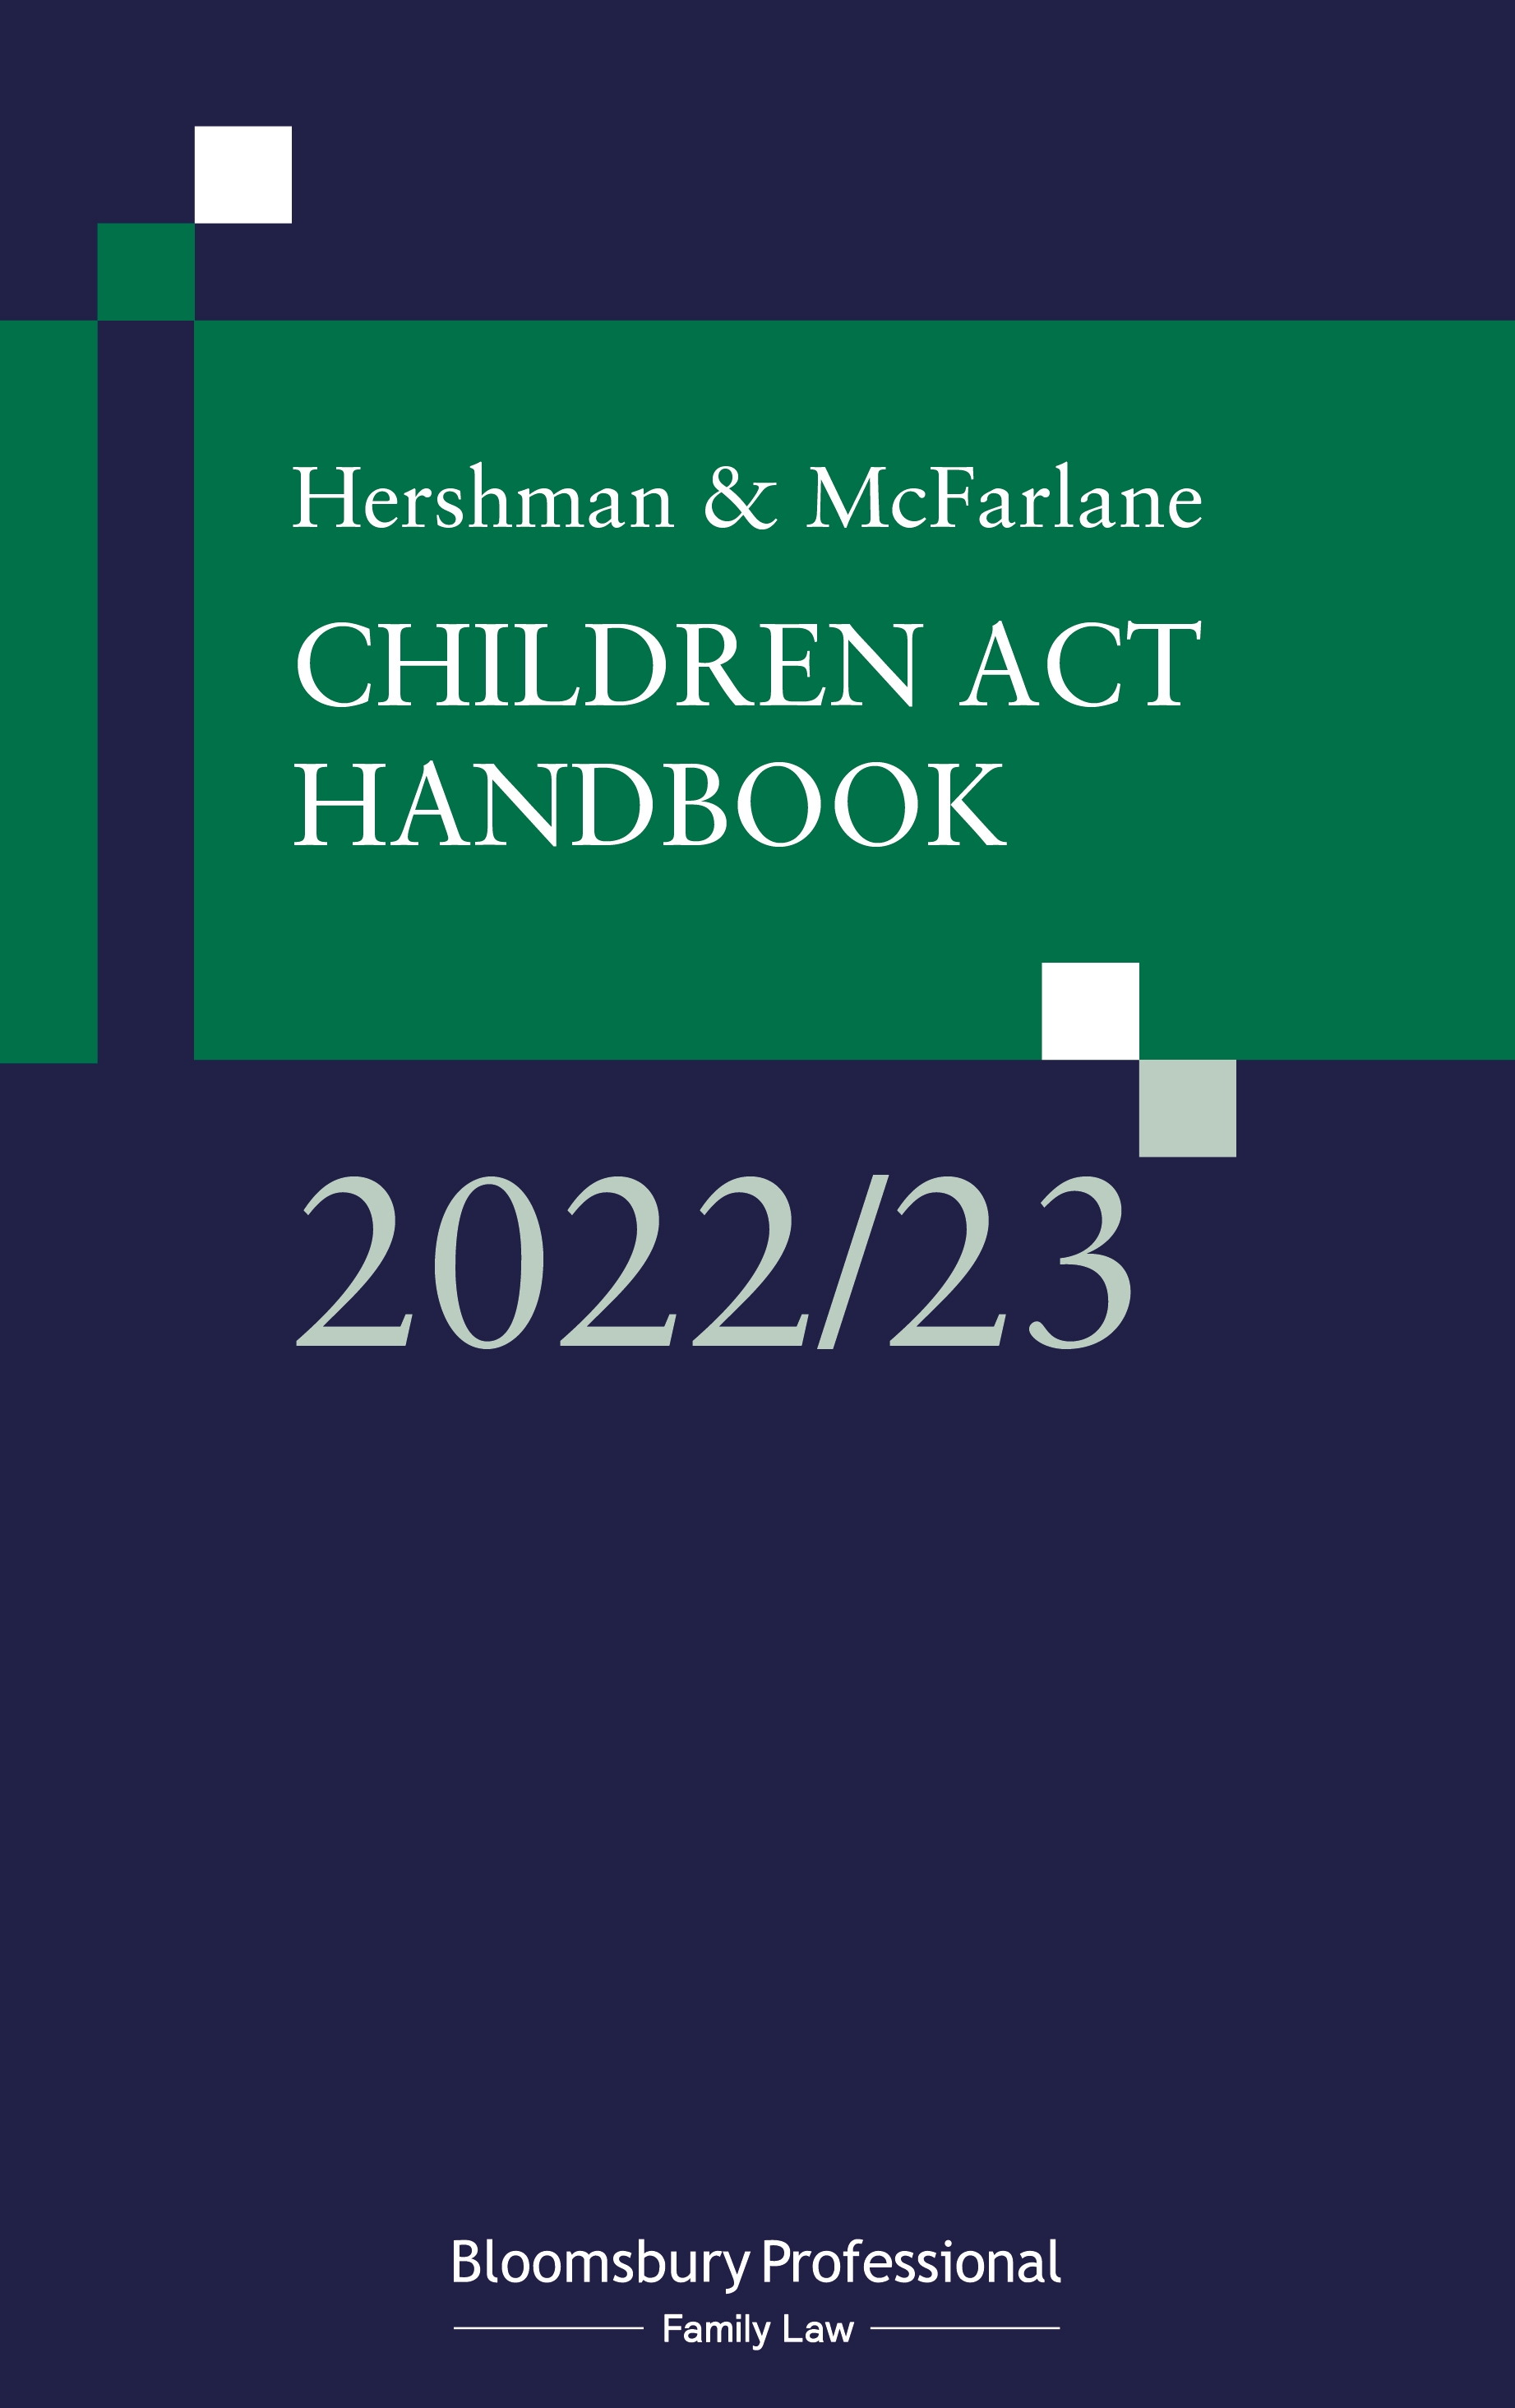 Hershman and McFarlane: Children Act Handbook 2022/23 book jacket